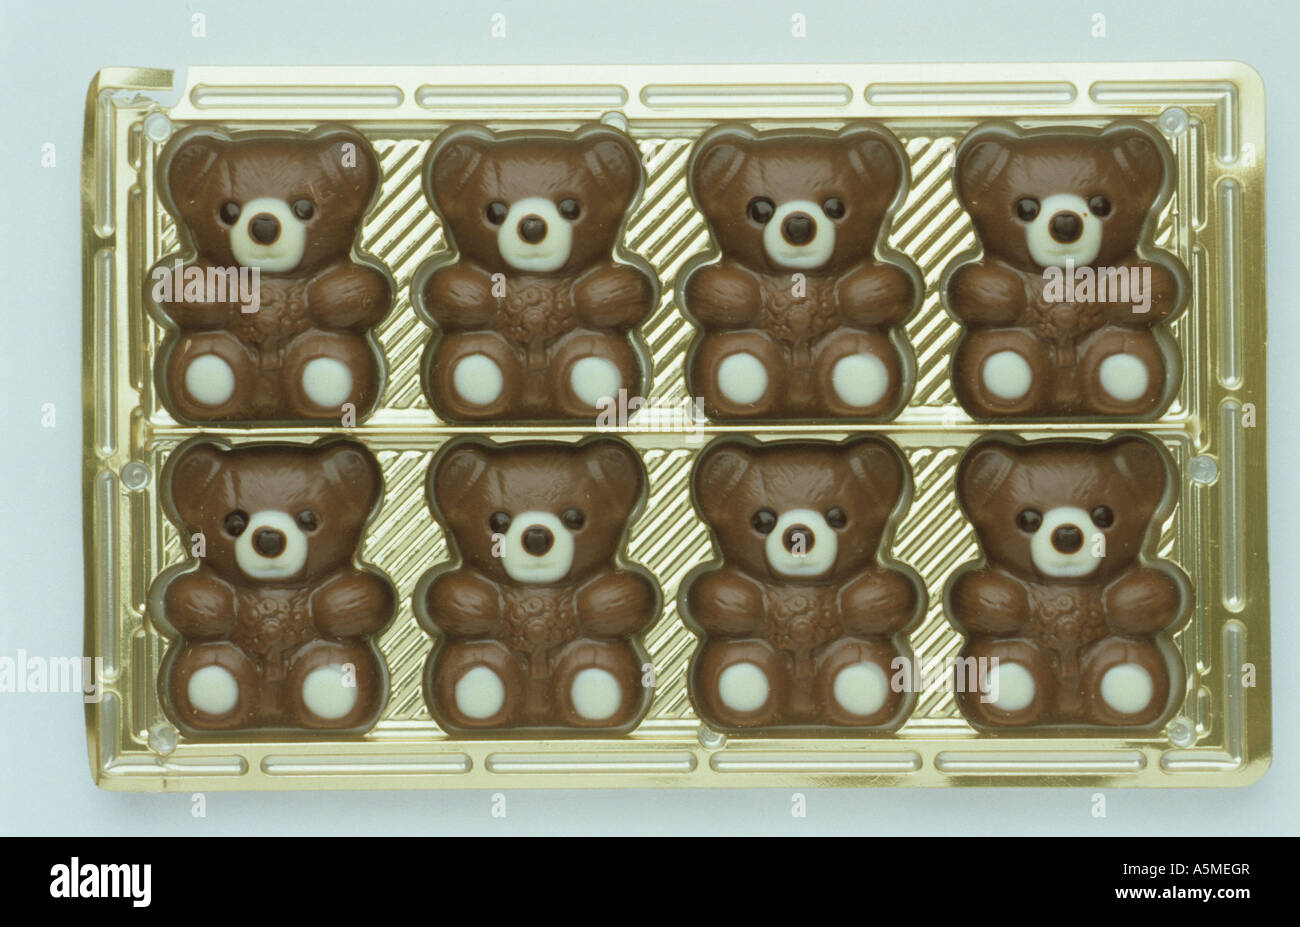 La société chocolat Schokolade Nahrungsmittel Nahrung generi alimentari alimentaire alimentazione nutrizione und Knabber Süßigkeiten Banque D'Images